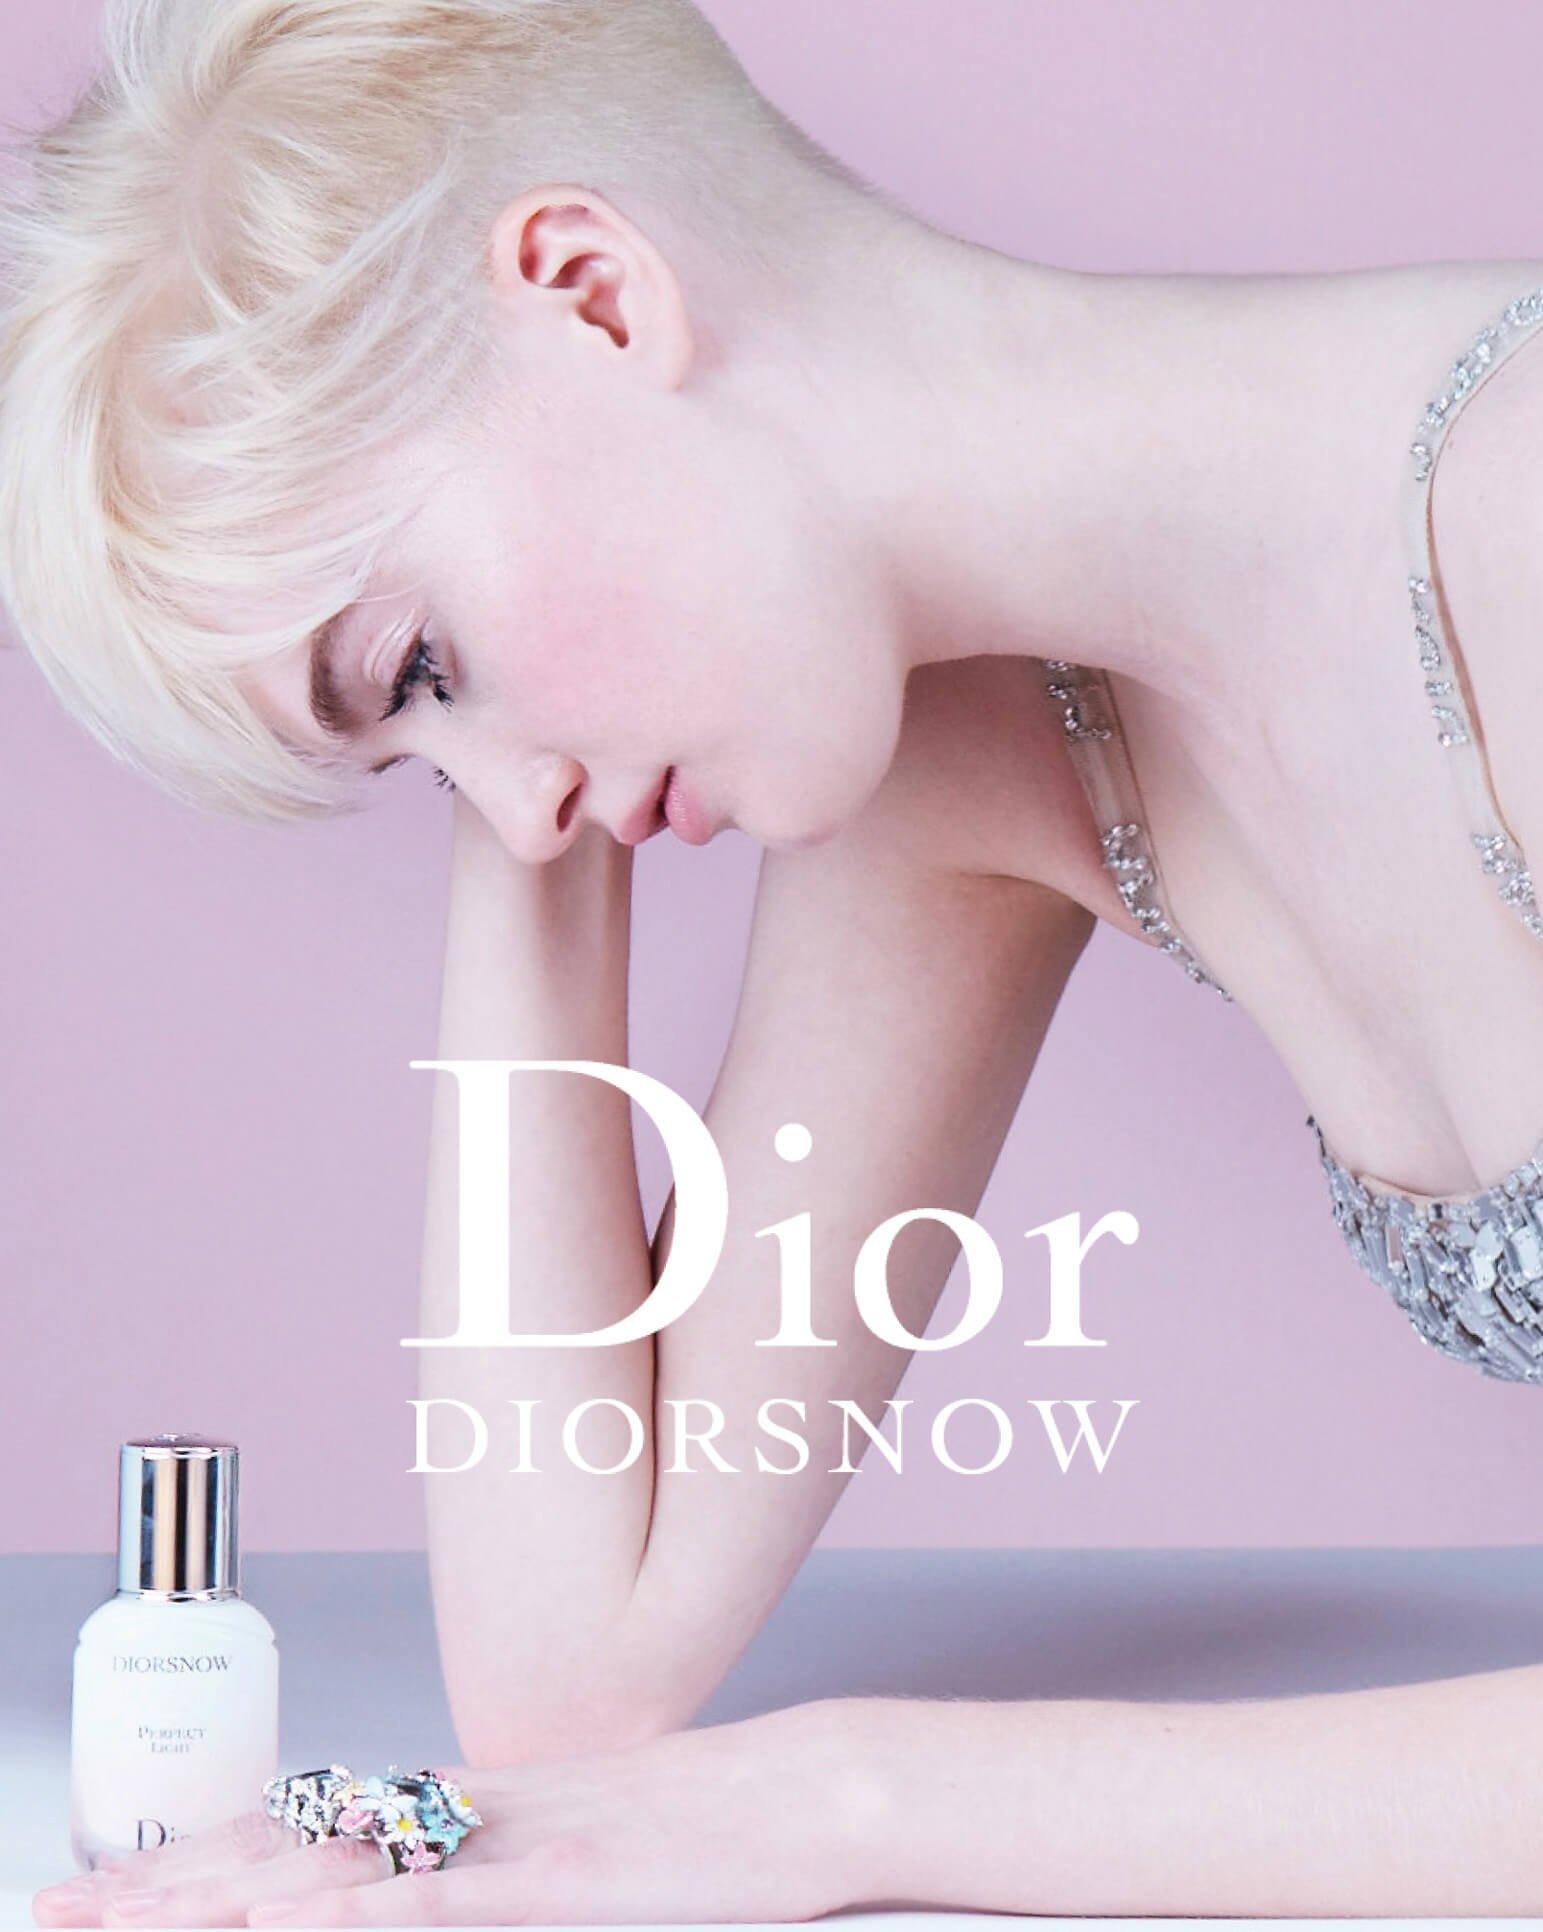 Dior Snow Perfect Light - Skin-Perfecting Liquid Light SPF25+ PA ++ มัลติทาสกิ้งลิควิดไลท์ที่ดูแลและปรับสภาพผิวให้สวย เพื่อปกป้องและยืดอายุความกระจ่างใสของผิวให้ยาวนาน ประกอบด้วยฟิลเตอร์ UVA และ UVB สำหรับปกป้องทุกวัน